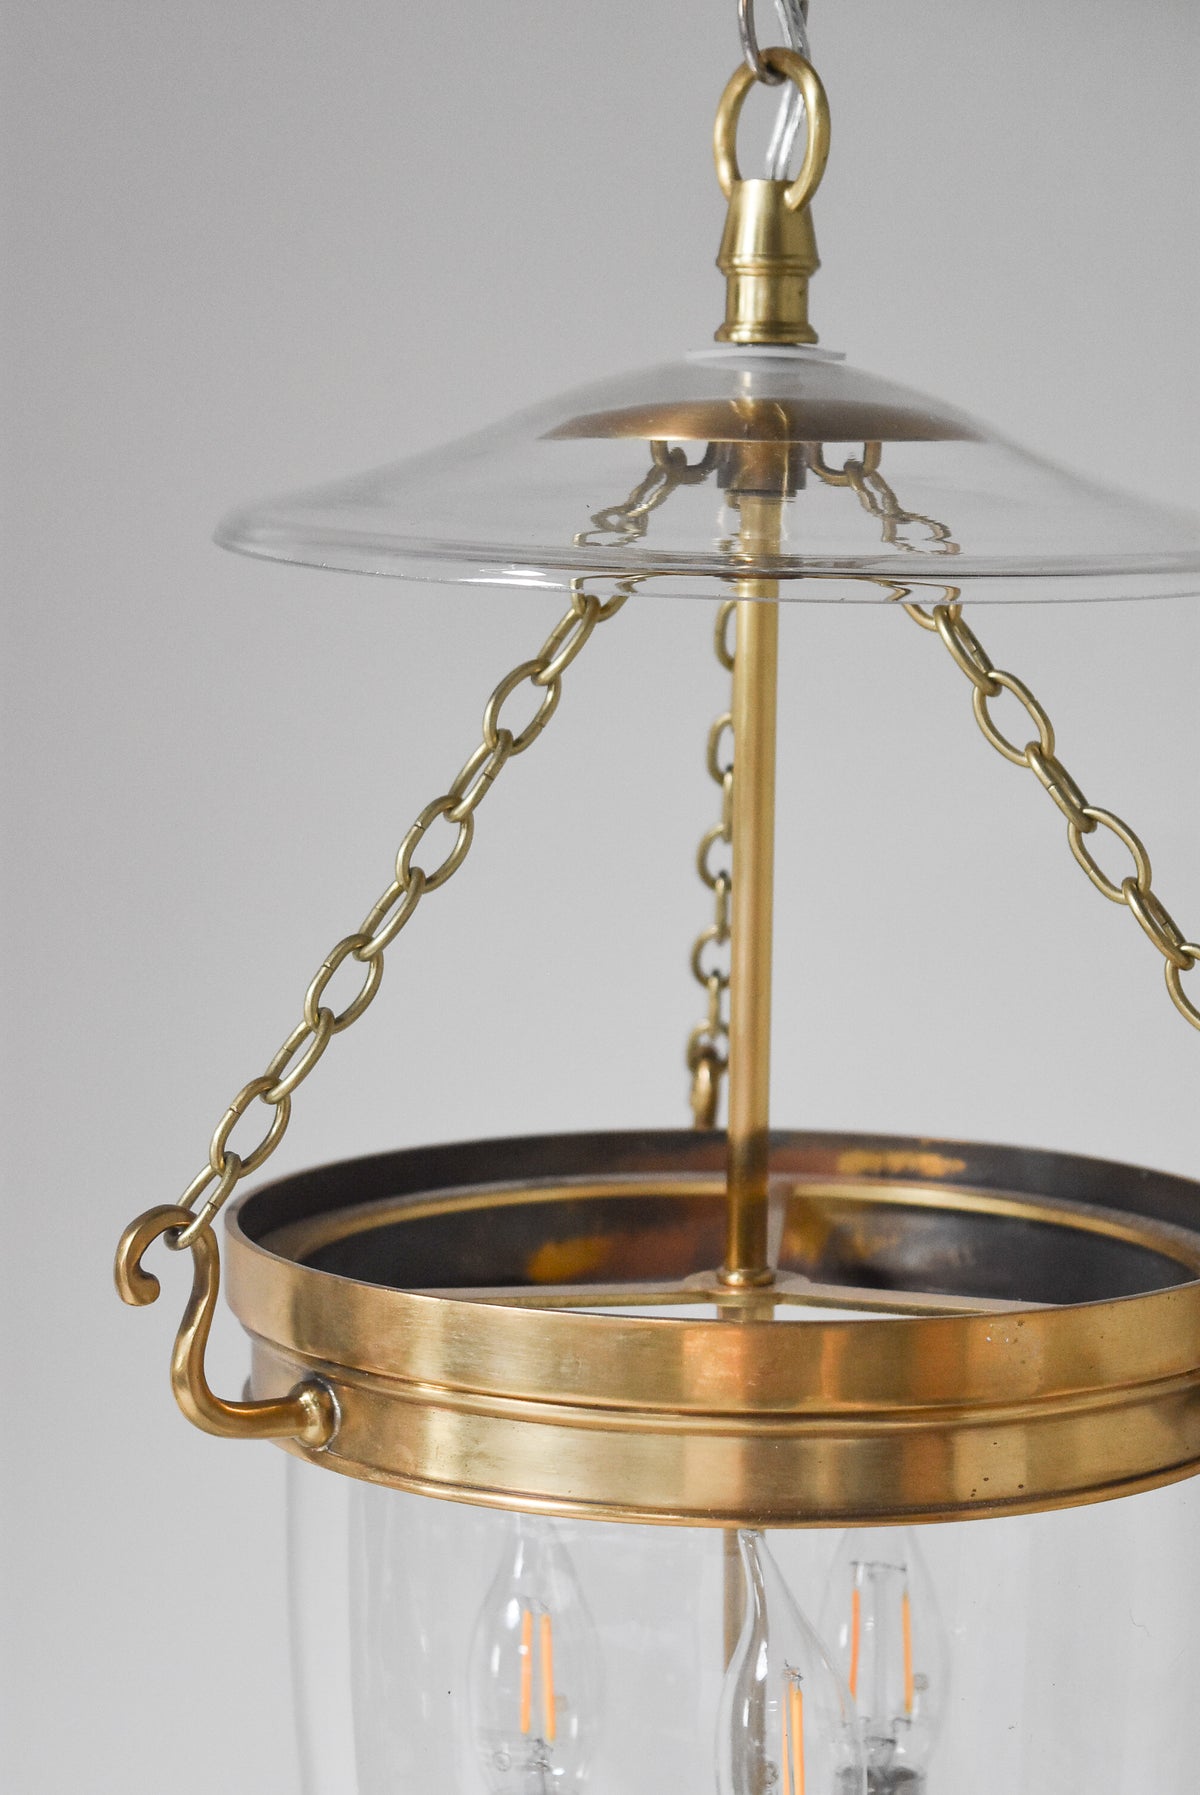 Brass Bell Jar Lantern